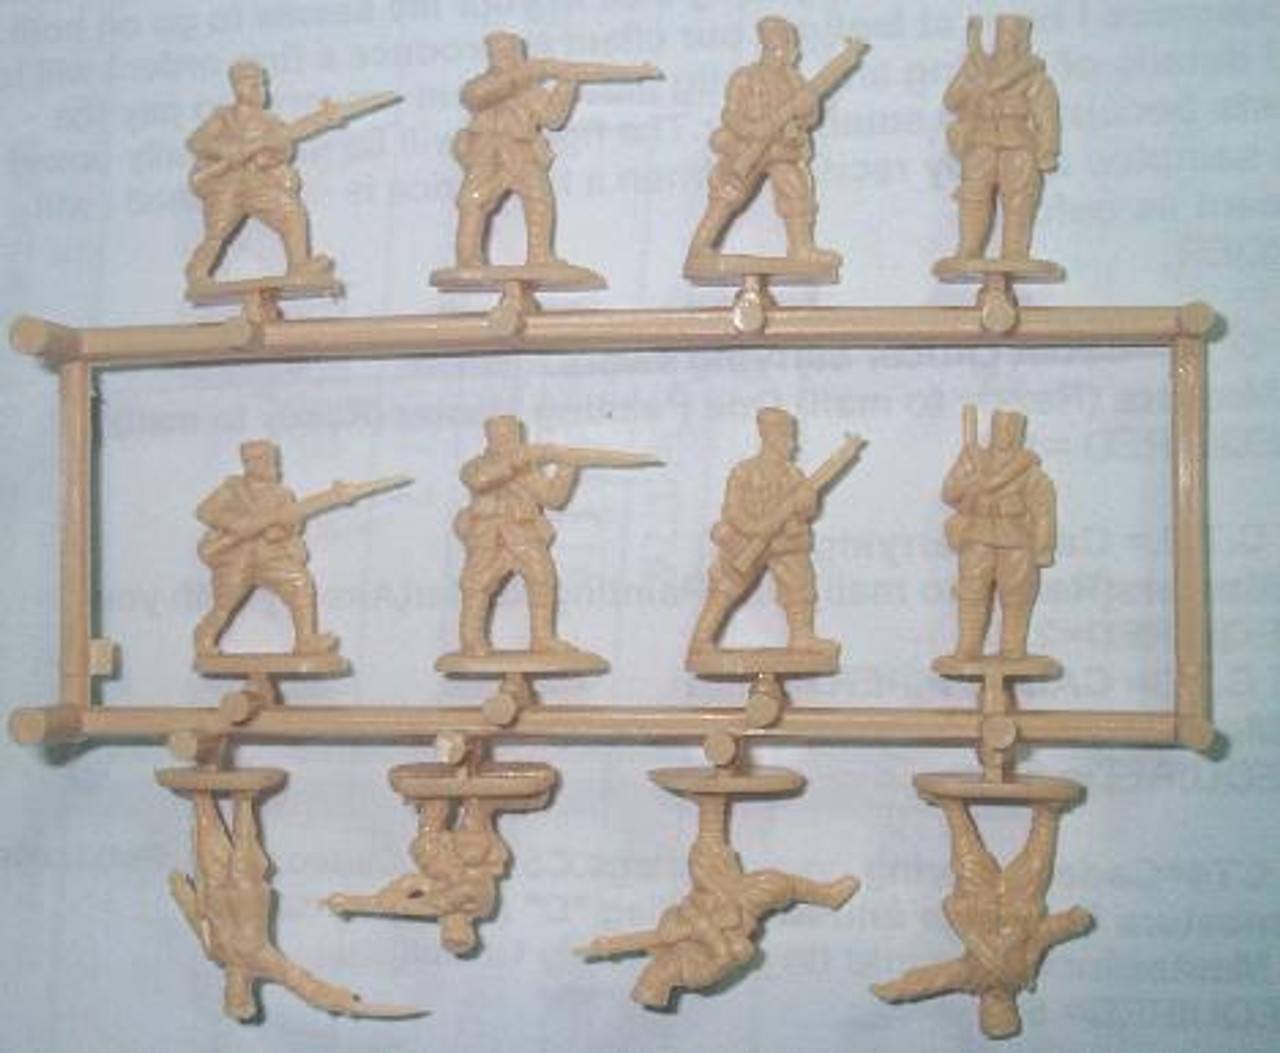 HaT 8122 WWI Serbian Infantry 1:72 Scale Figures